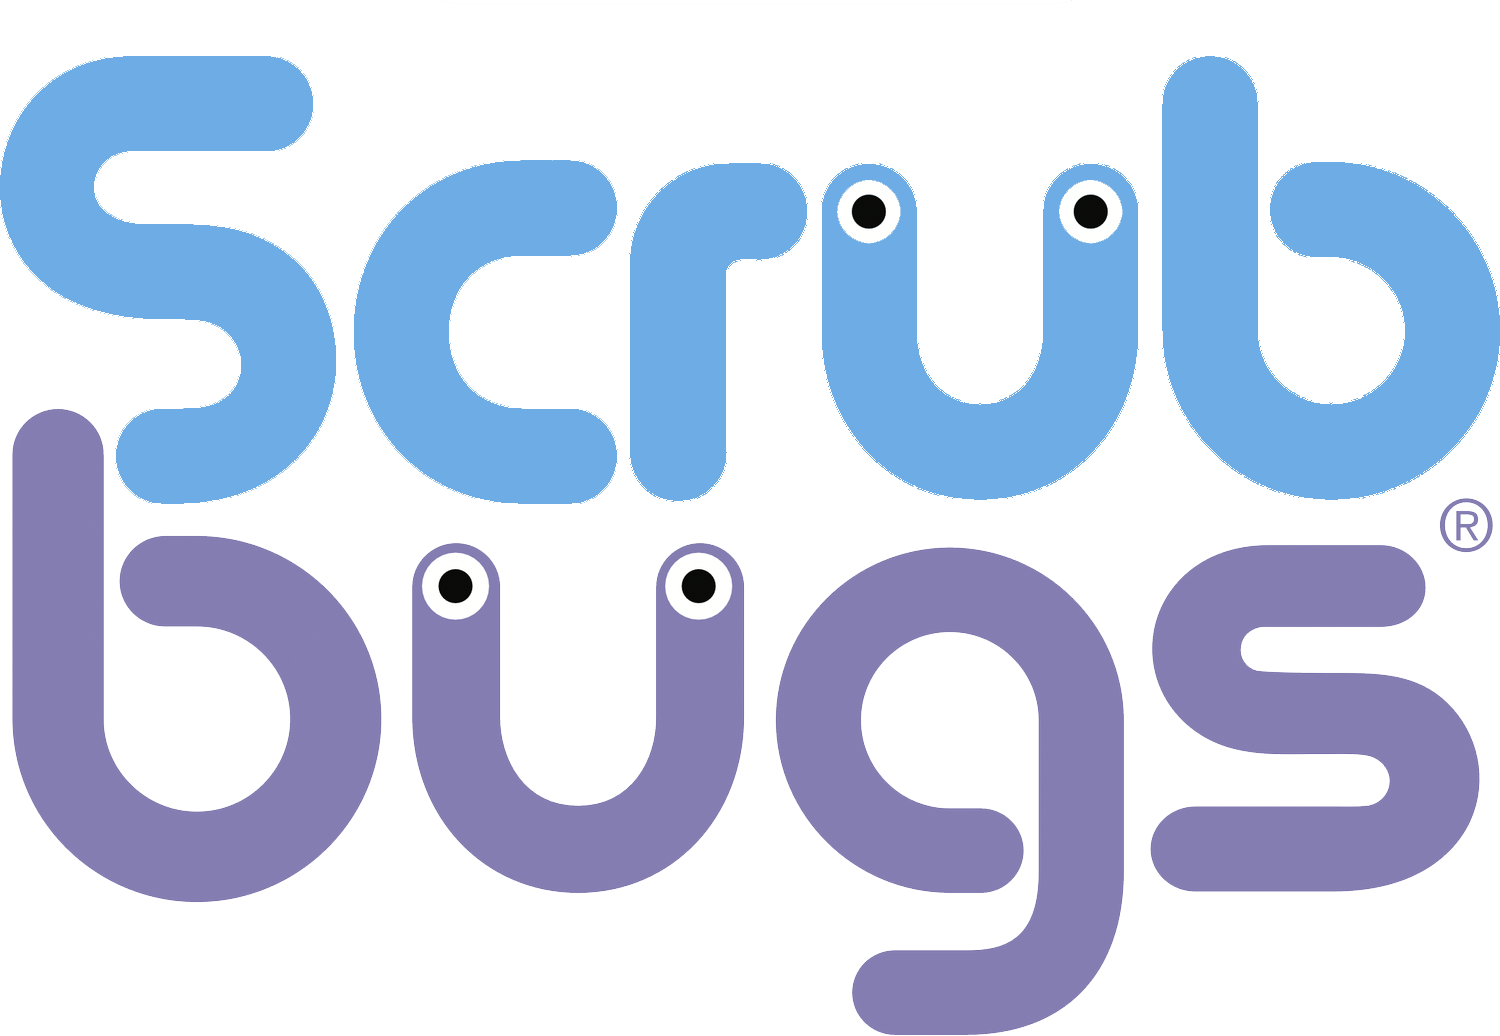 Scrub Bugs